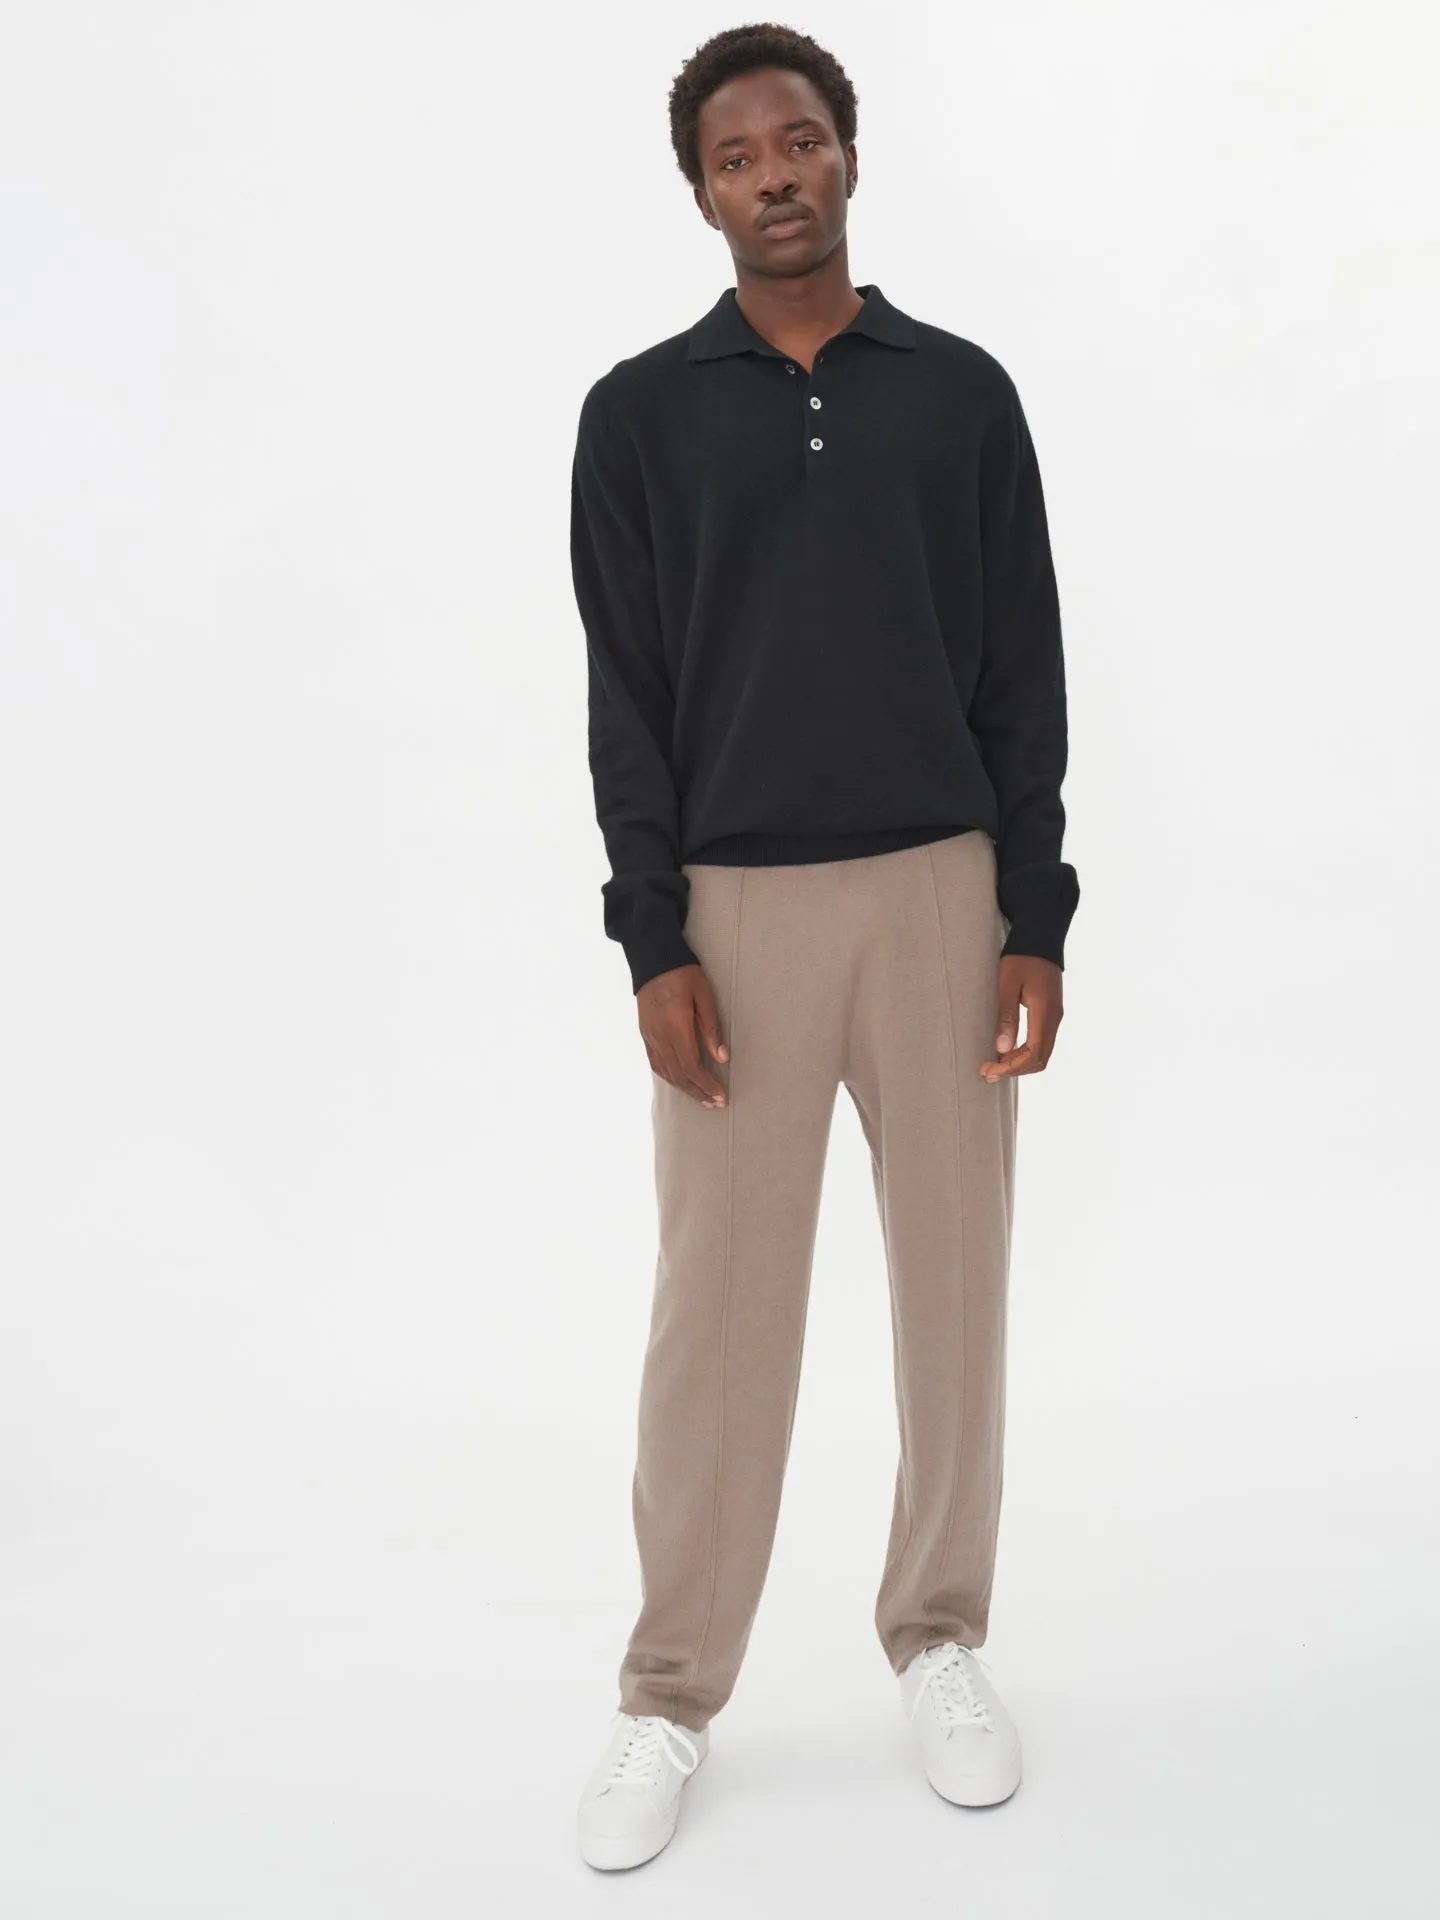 Men's Cashmere Polo Sweater Black - Gobi Cashmere